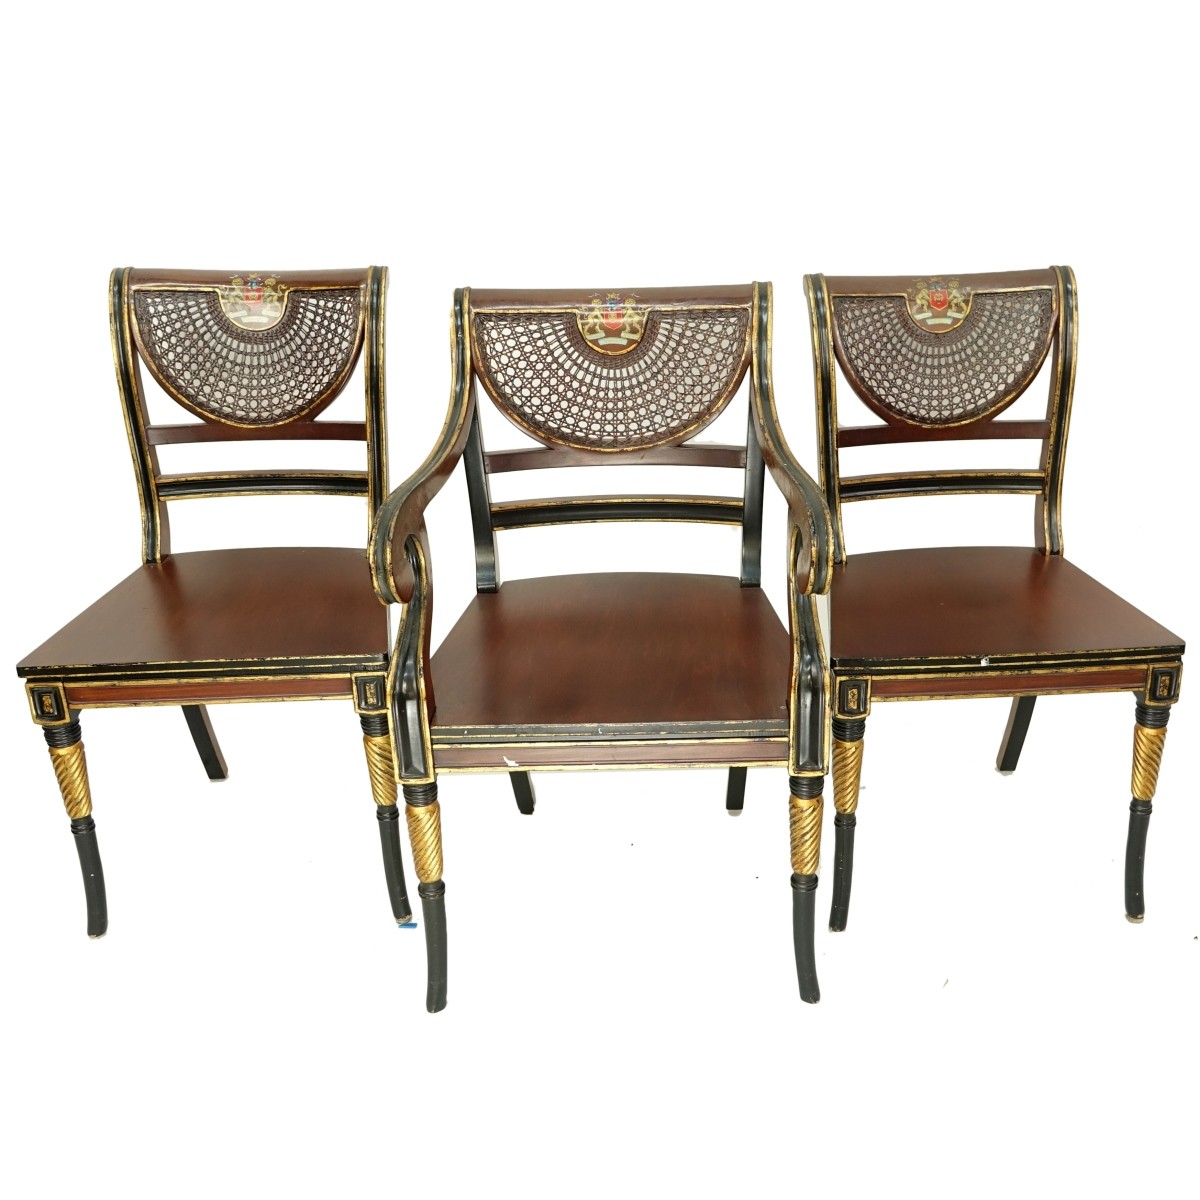 Three Cane Back Chairs